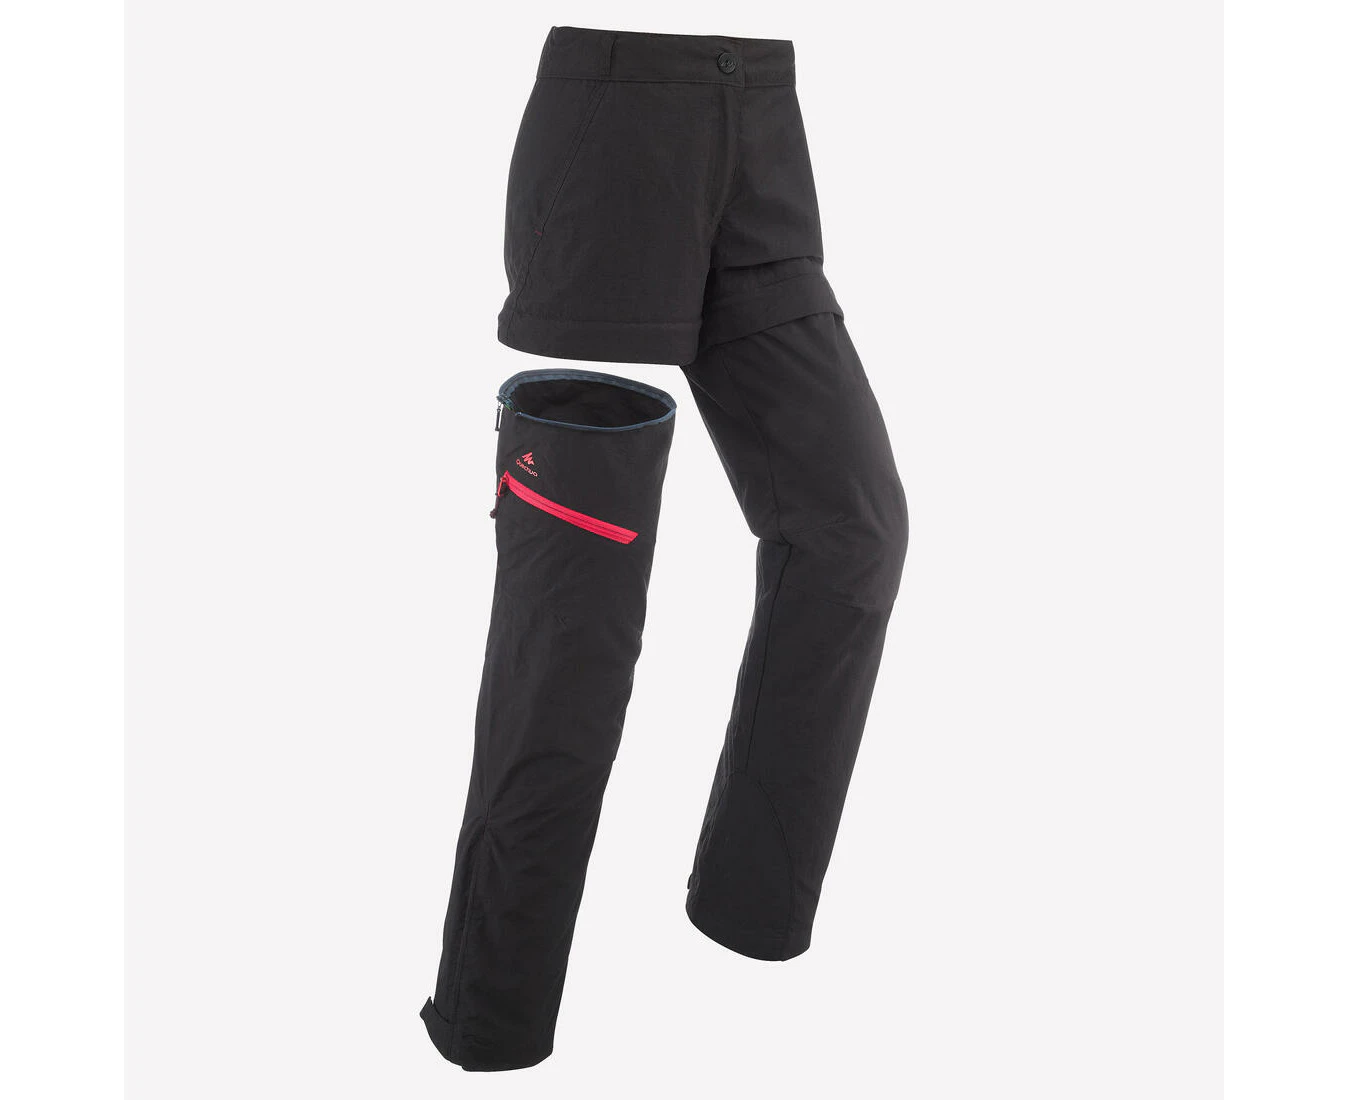 Decathlon Quechua Women's Ski/Snowboard Pant in Black. US sz 8 (EUR 42) |  Clothes design, Snowboard pants, Women